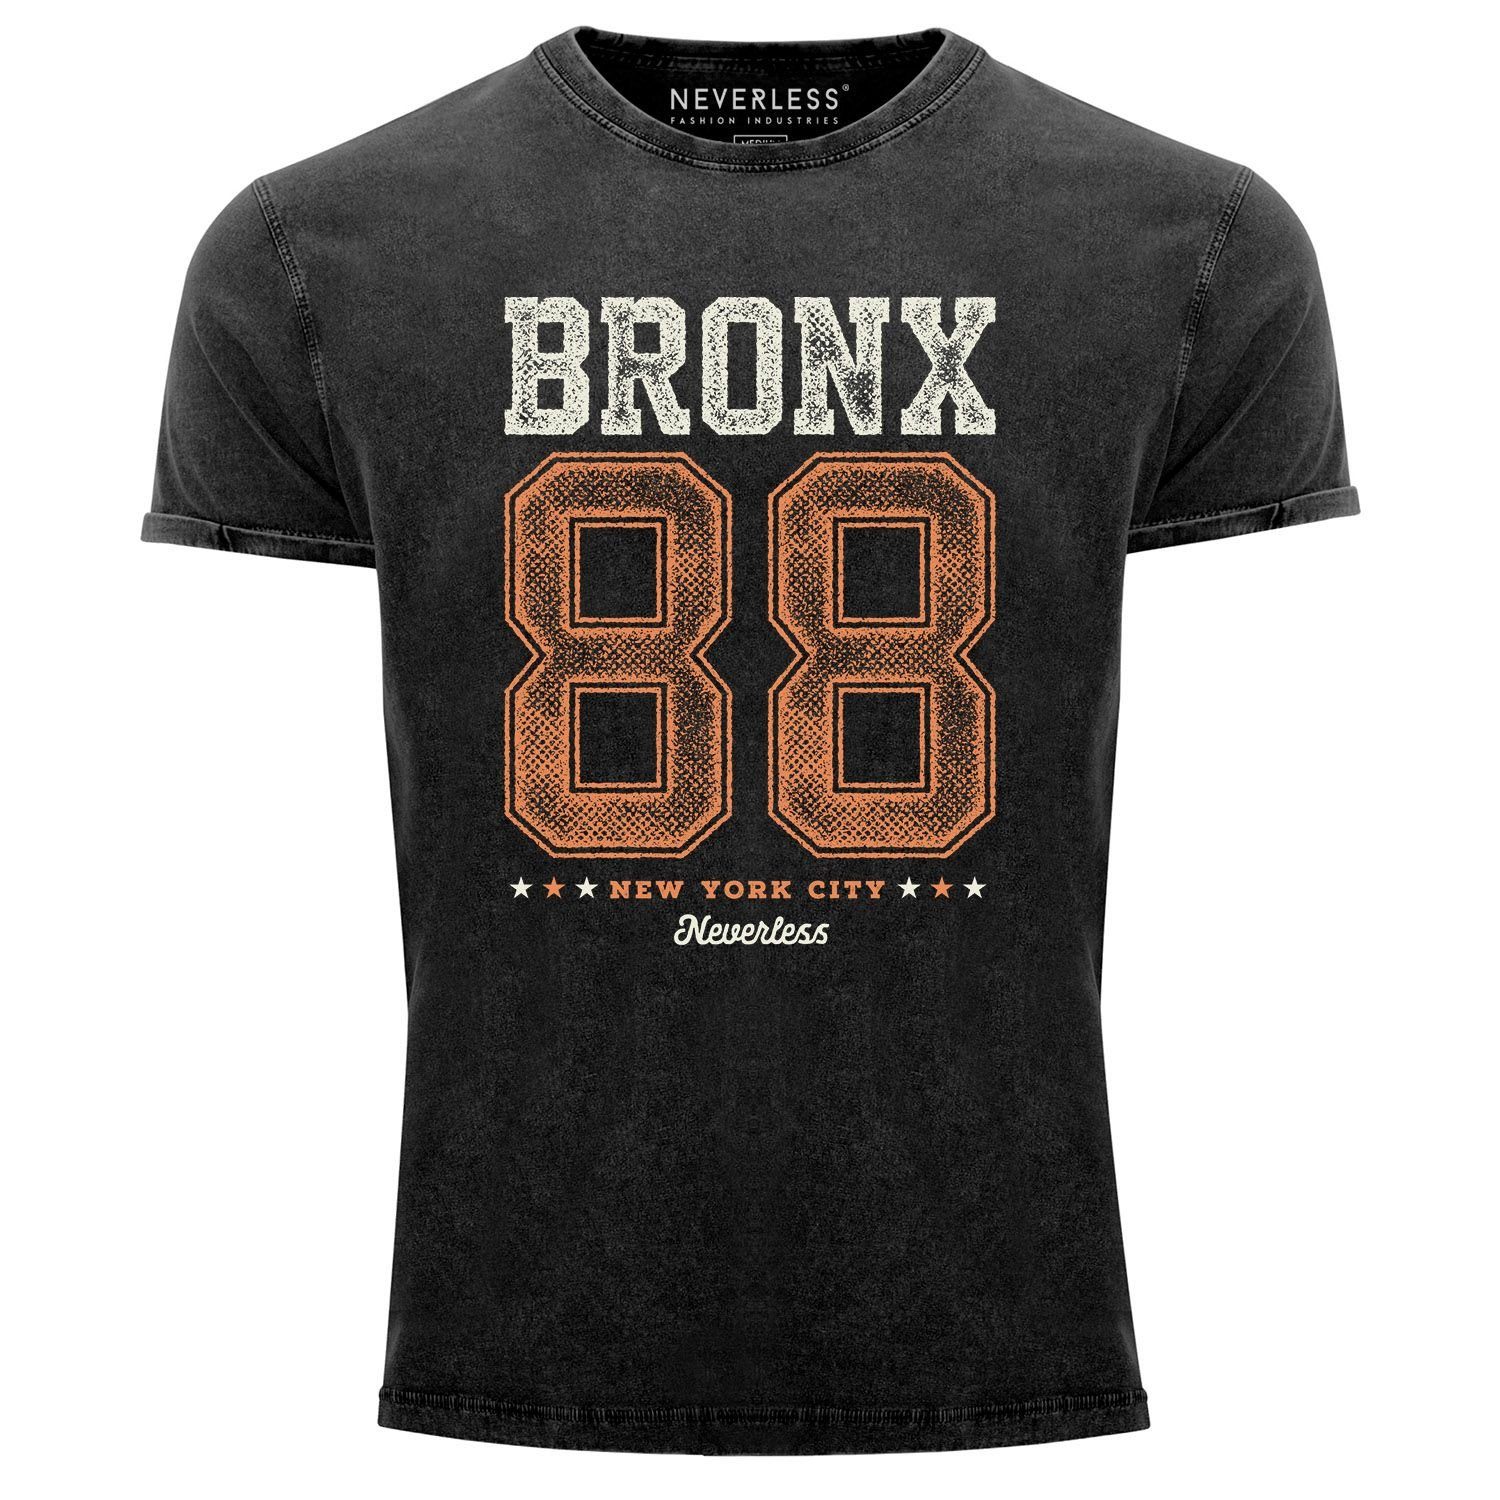 Neverless Print-Shirt Neverless® Herren T-Shirt Vintage Shirt Printshirt Bronx 88 New York City Aufdruck Used Look Slim Fit mit Print